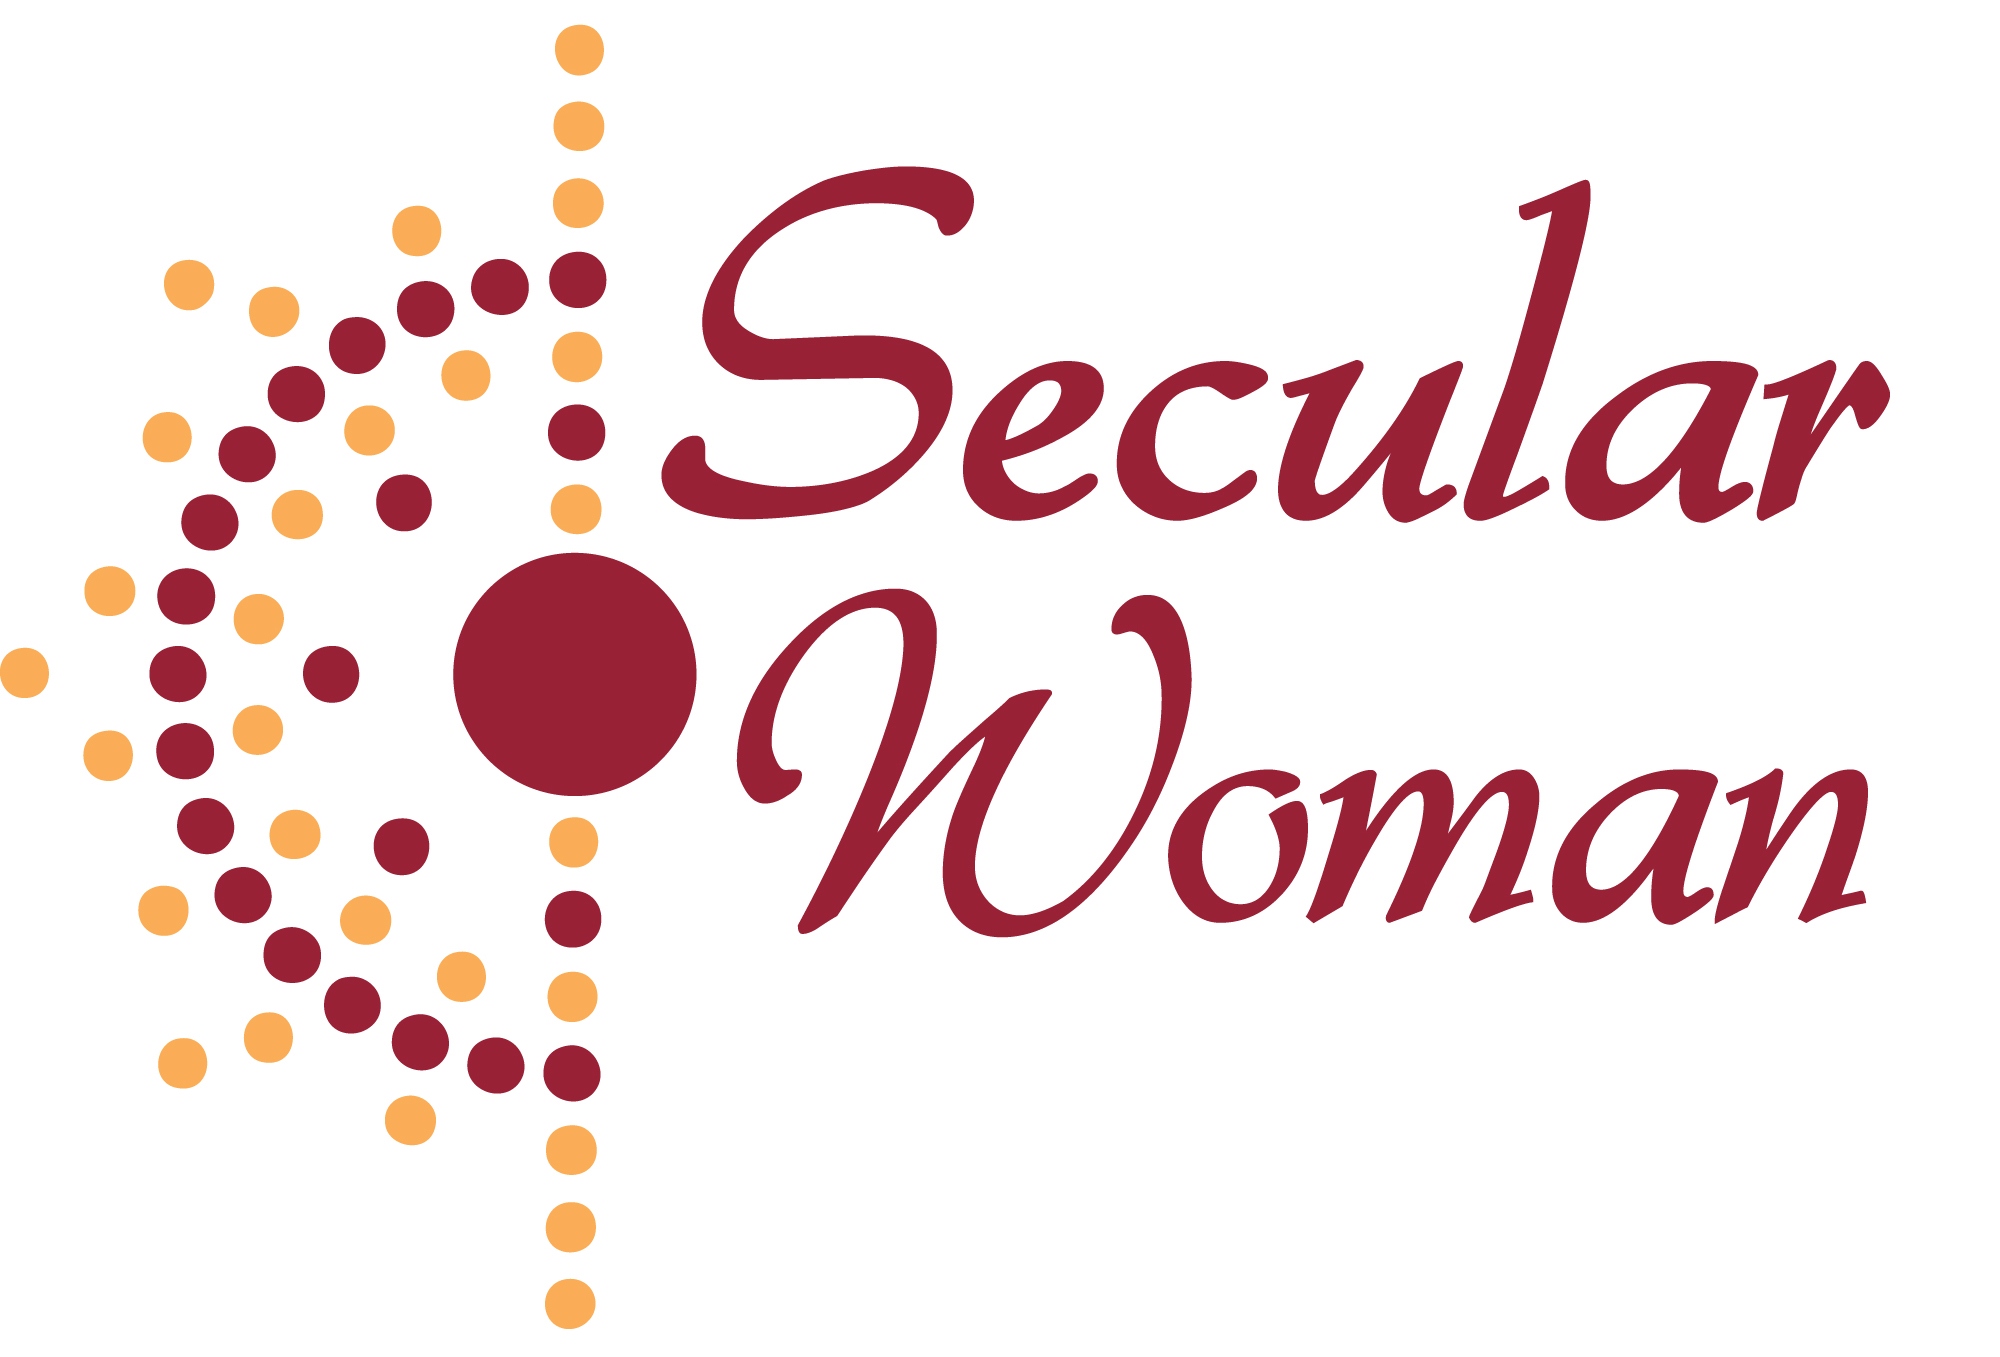 Secular Woman logo: stylized radium icon in dark red and light orange. Text: Secular Woman.